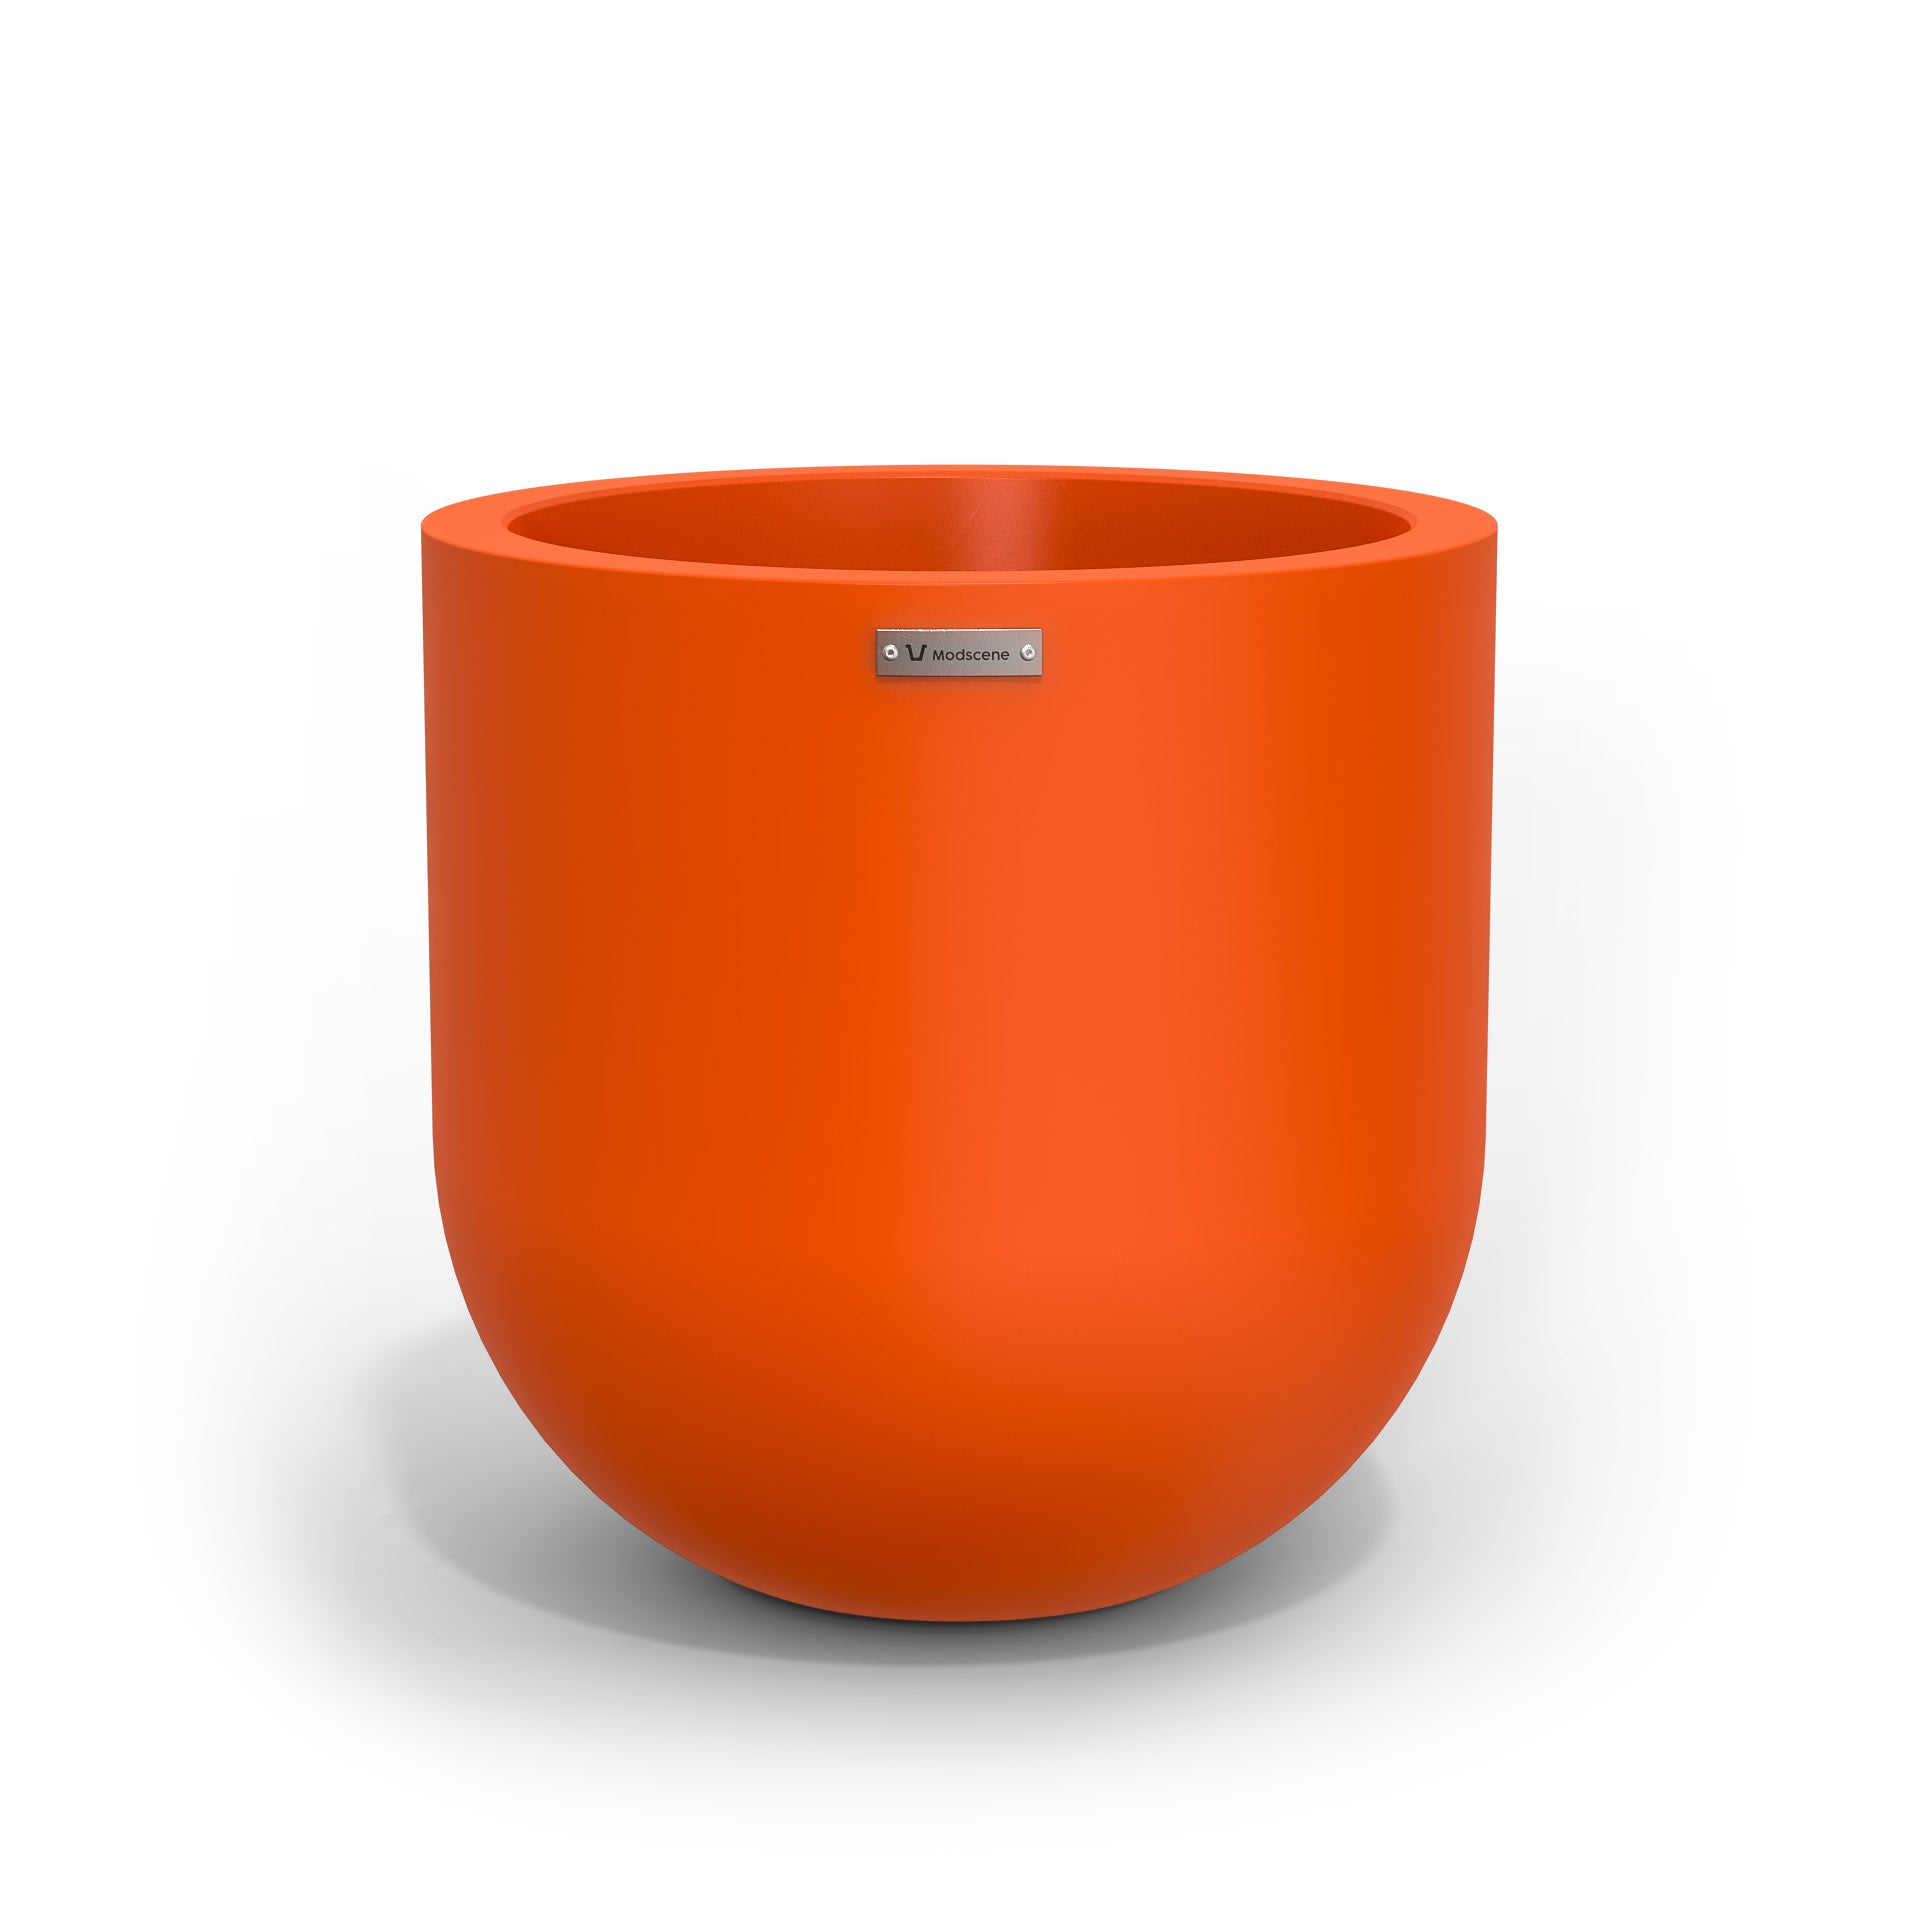 A medium sized orange planter pot made by Modscene.